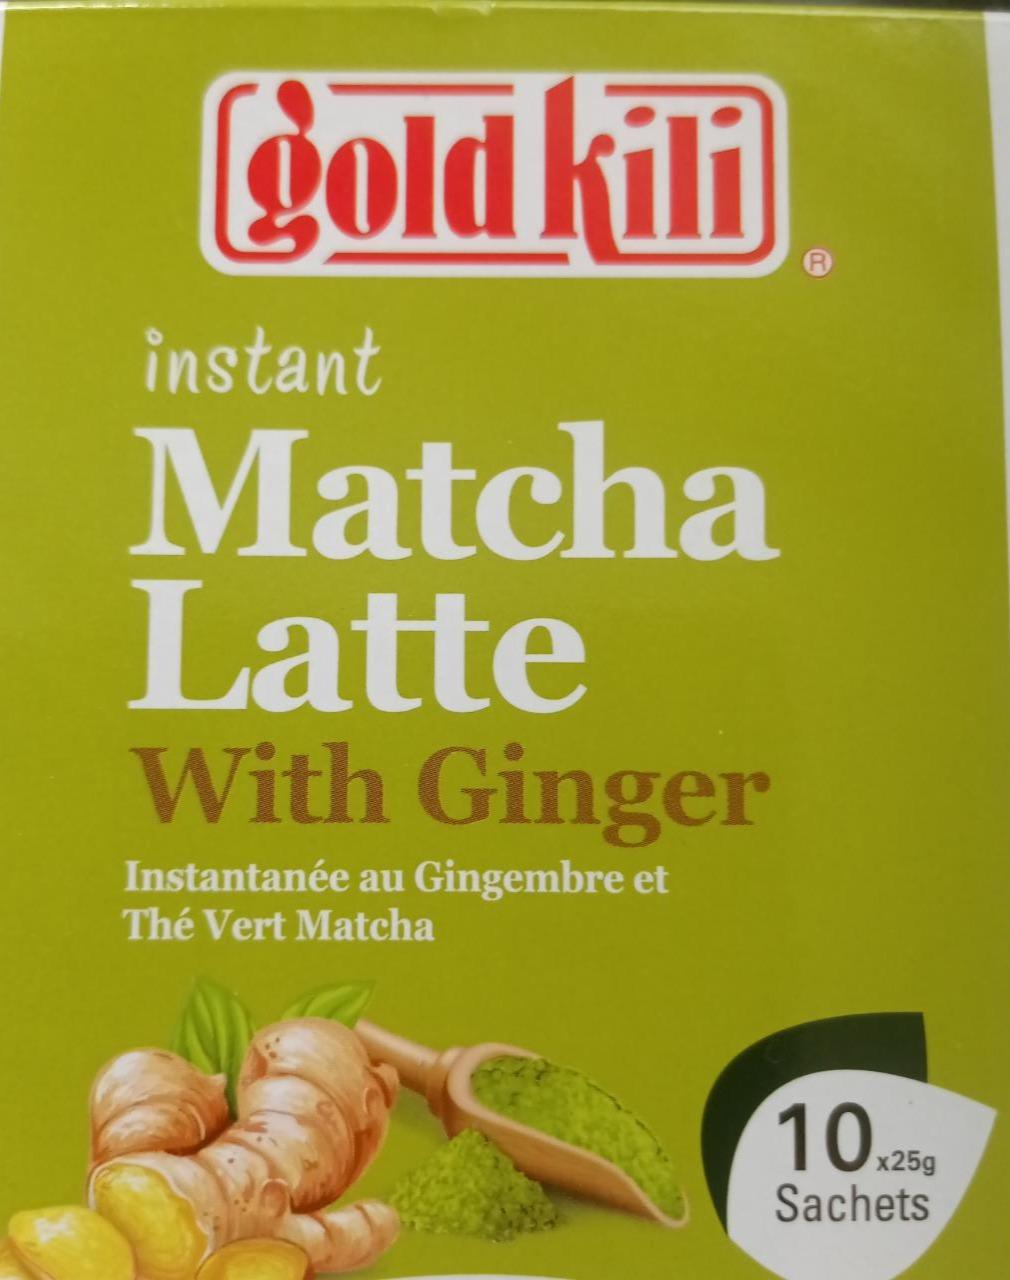 Фото - Чай Matchs Latte With Ginger Gold kili